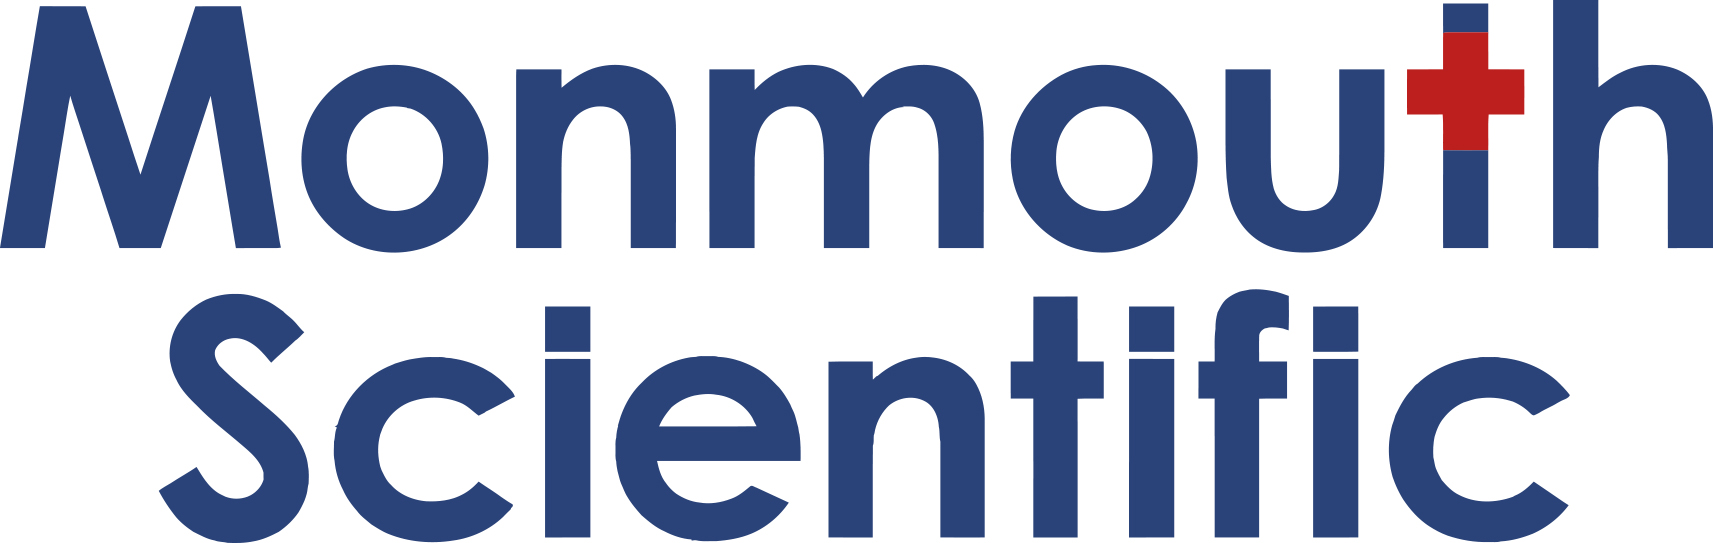 Monmouth Scientific Ltd